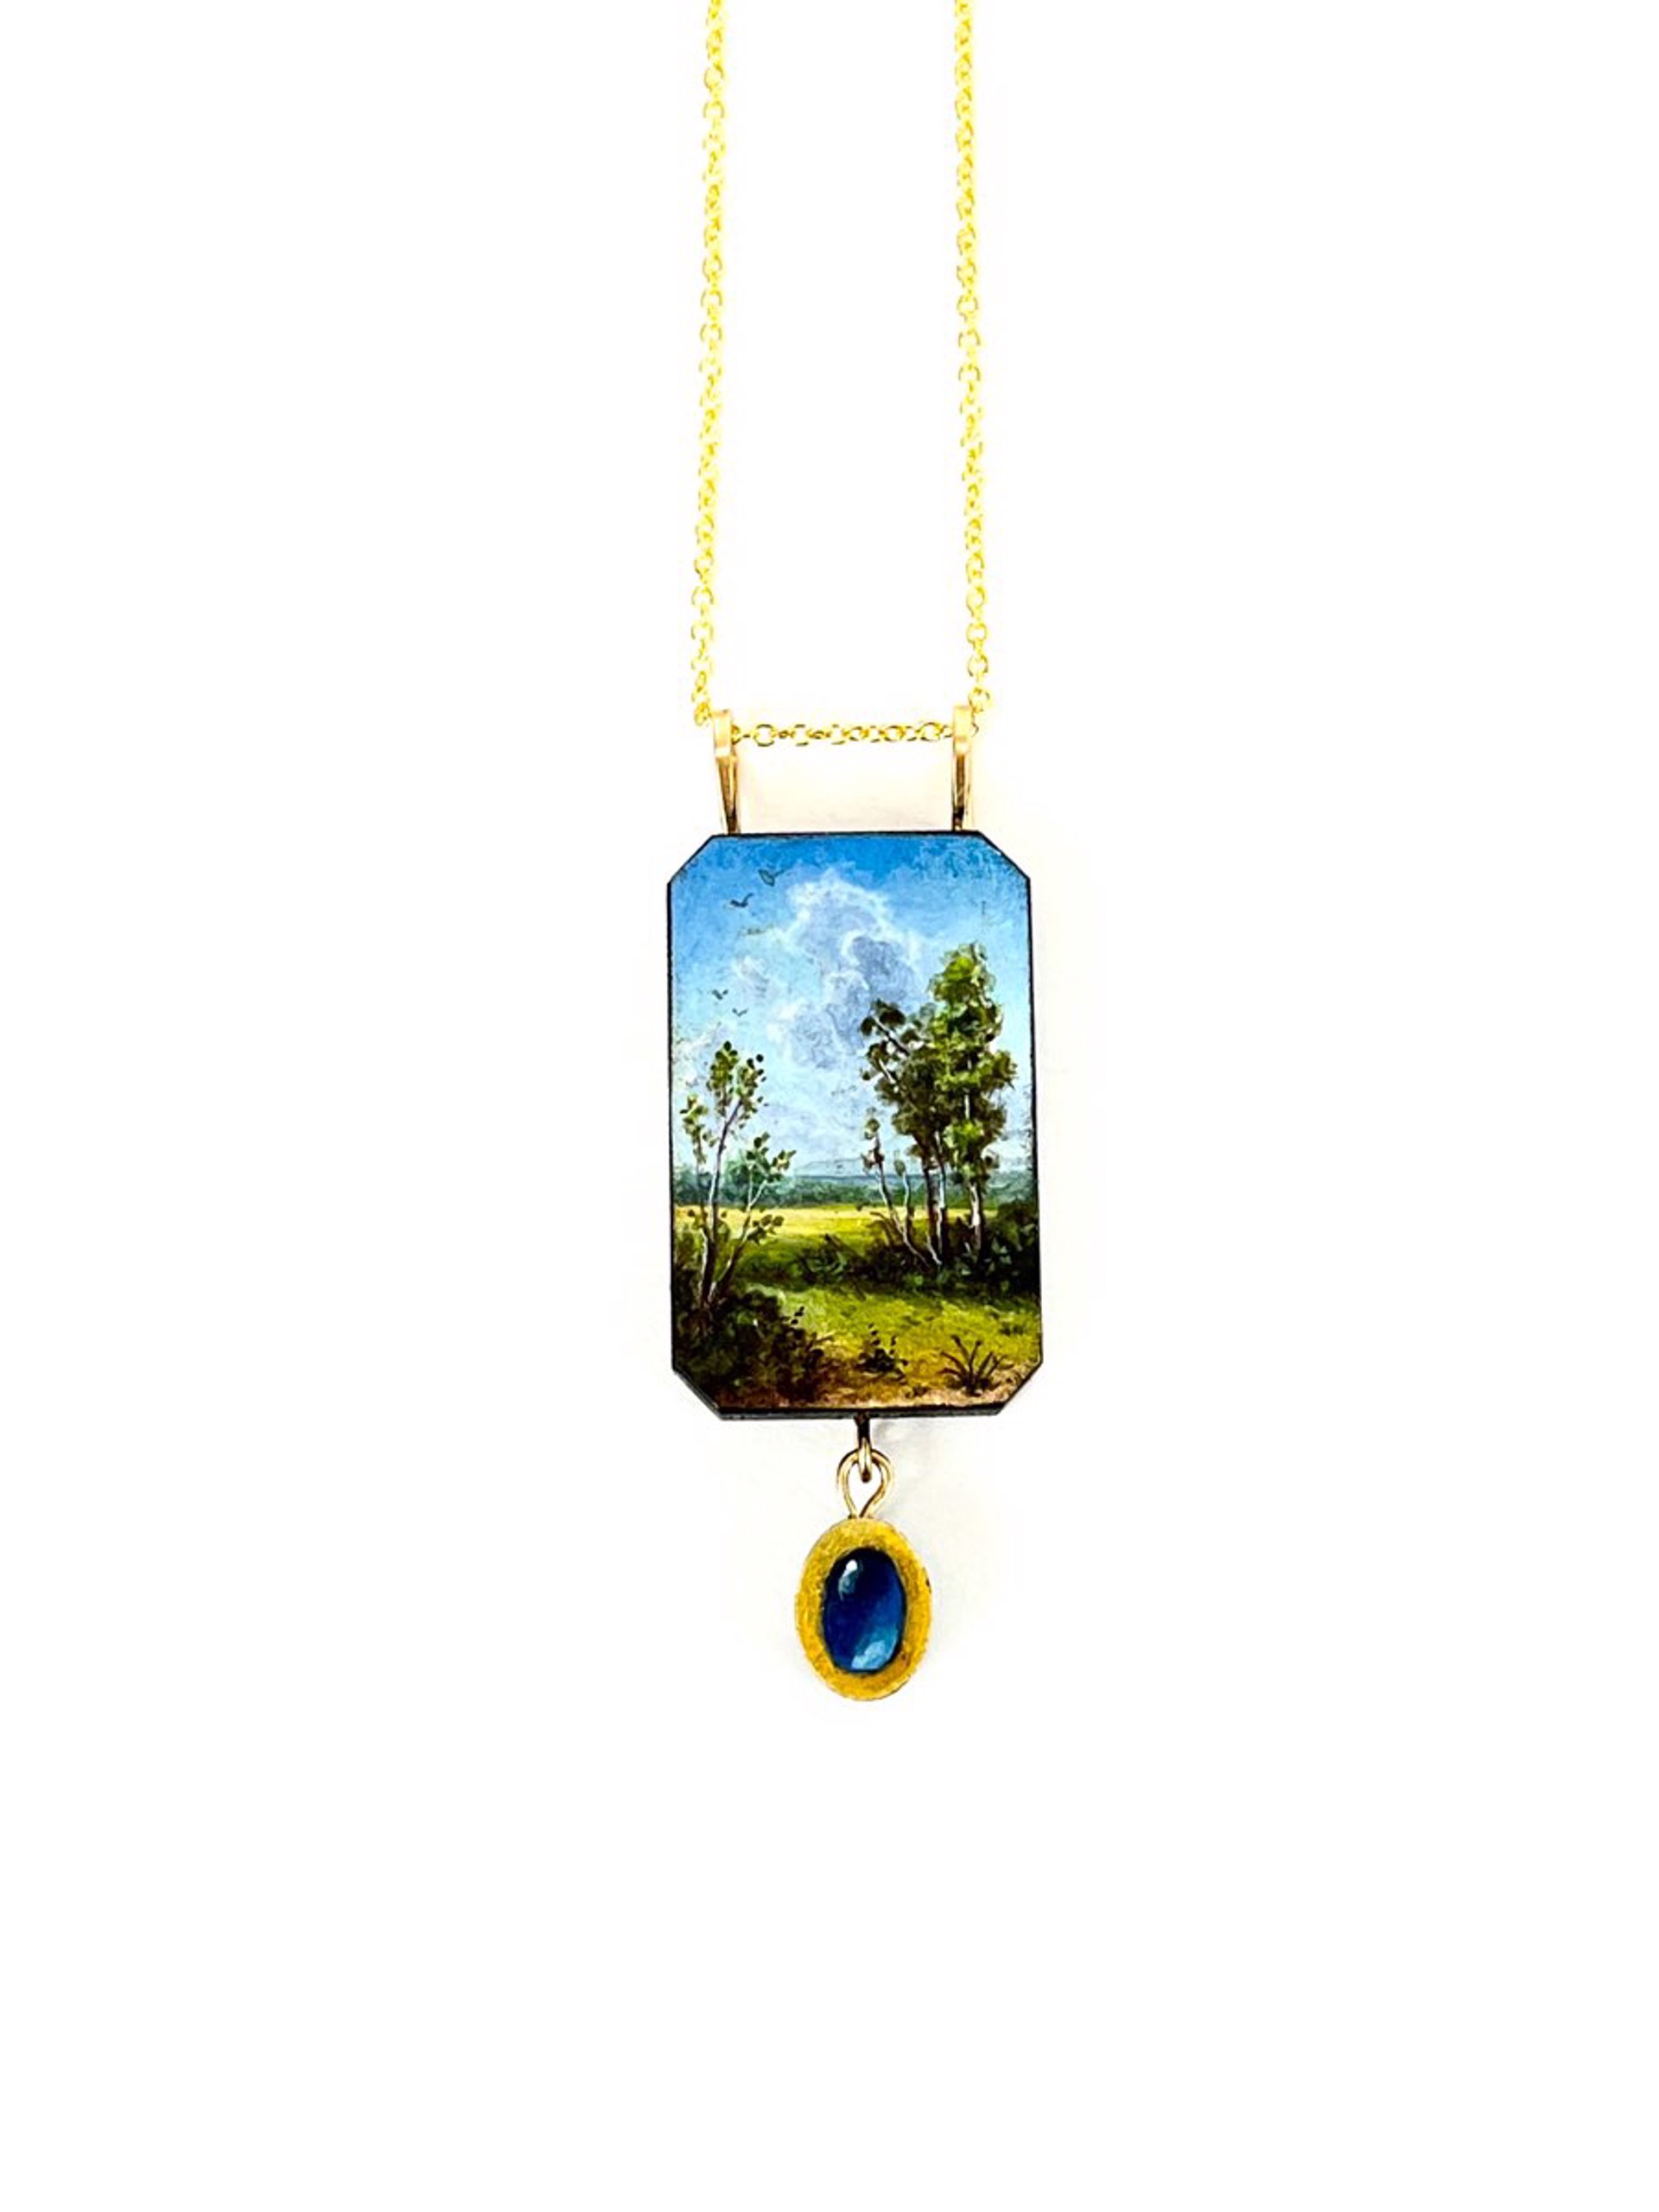 Summer Landscape Pendant w Painted Sapphire by Christina Goodman